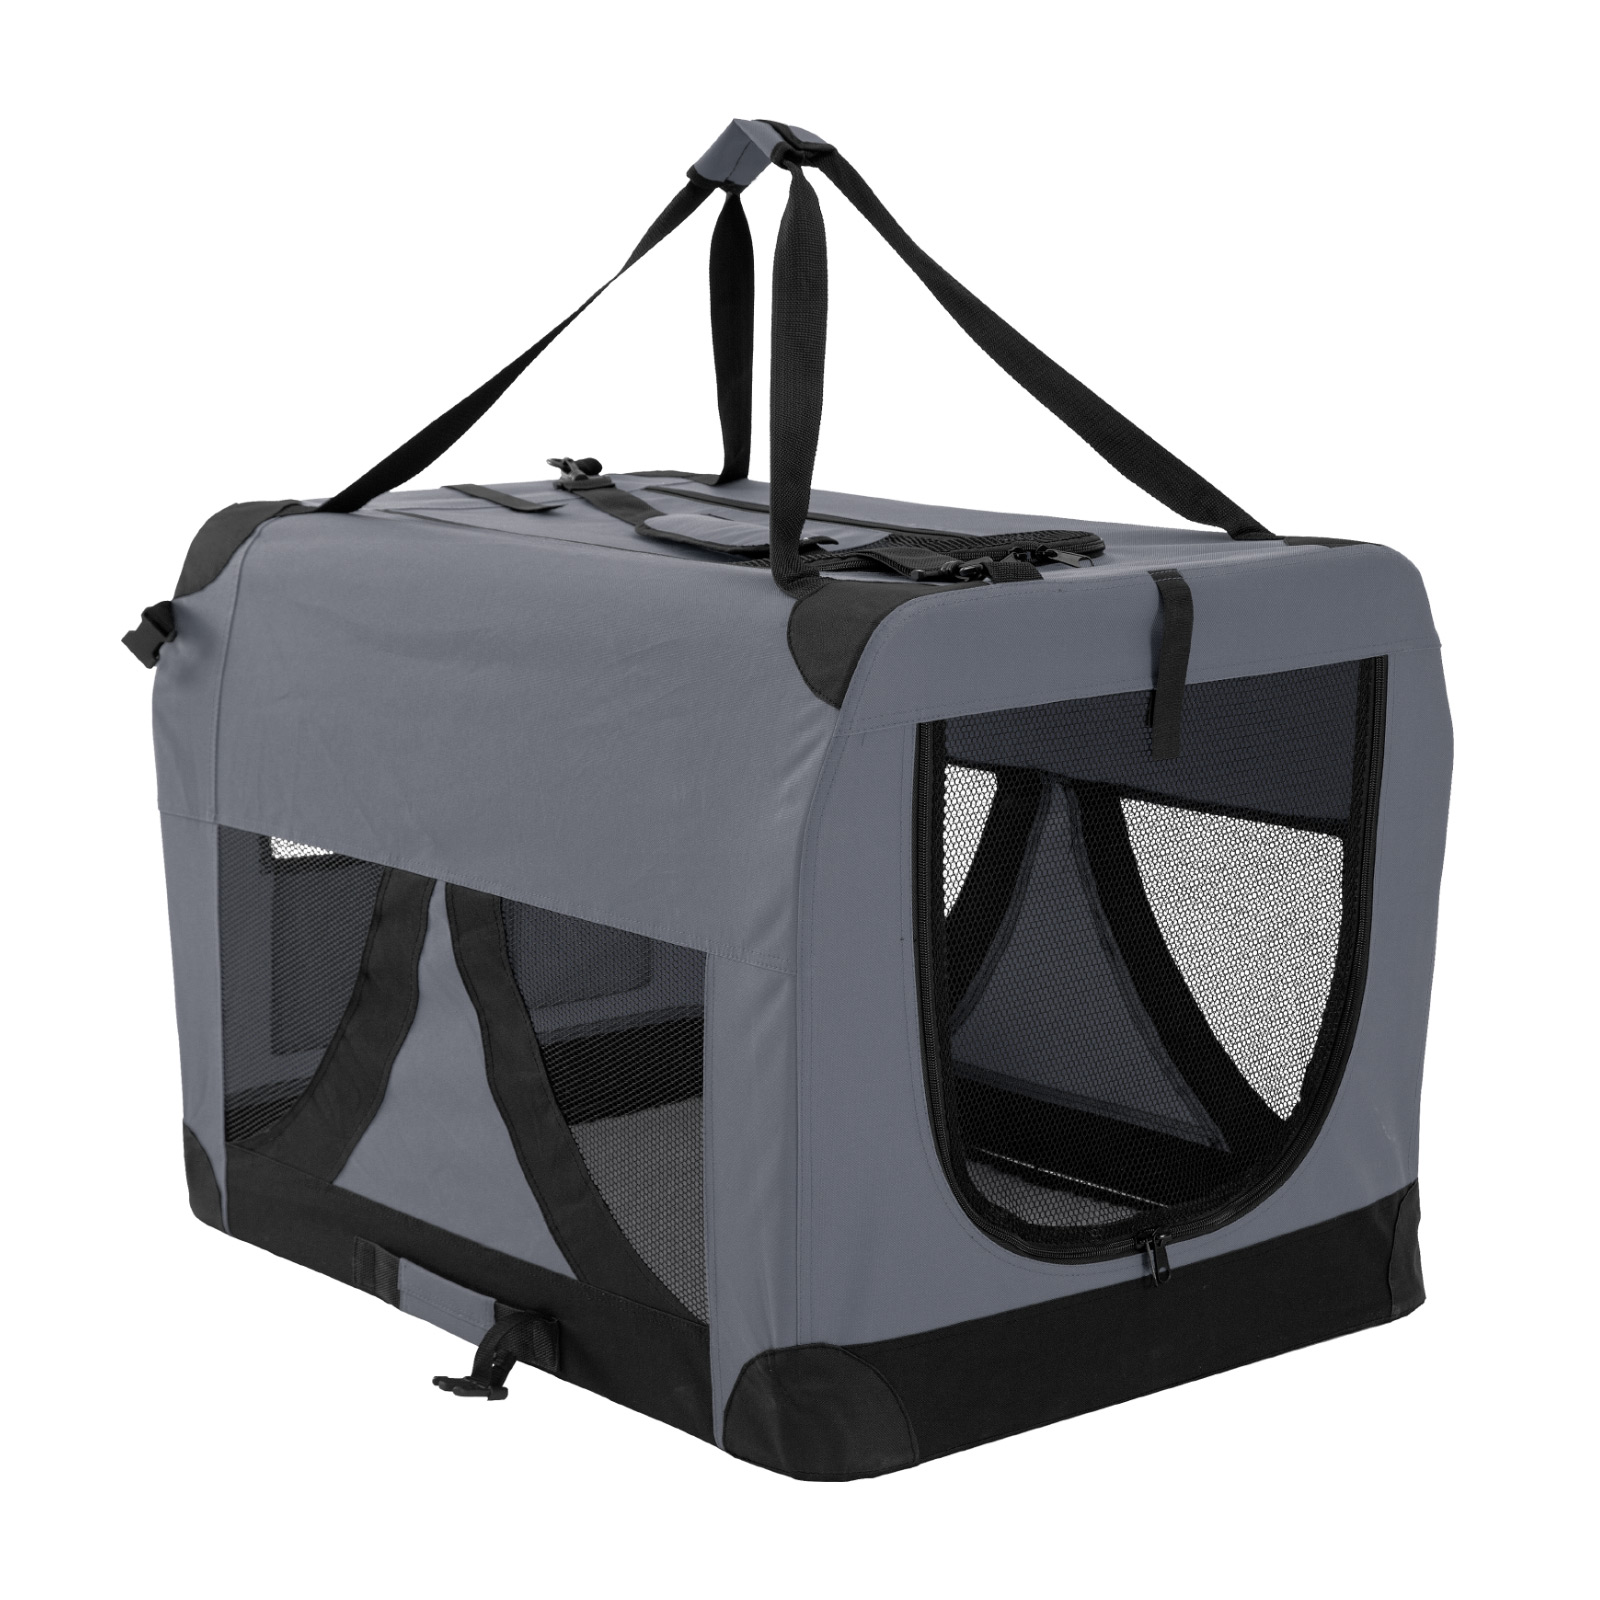 XL Portable Soft Dog Crate - GREY